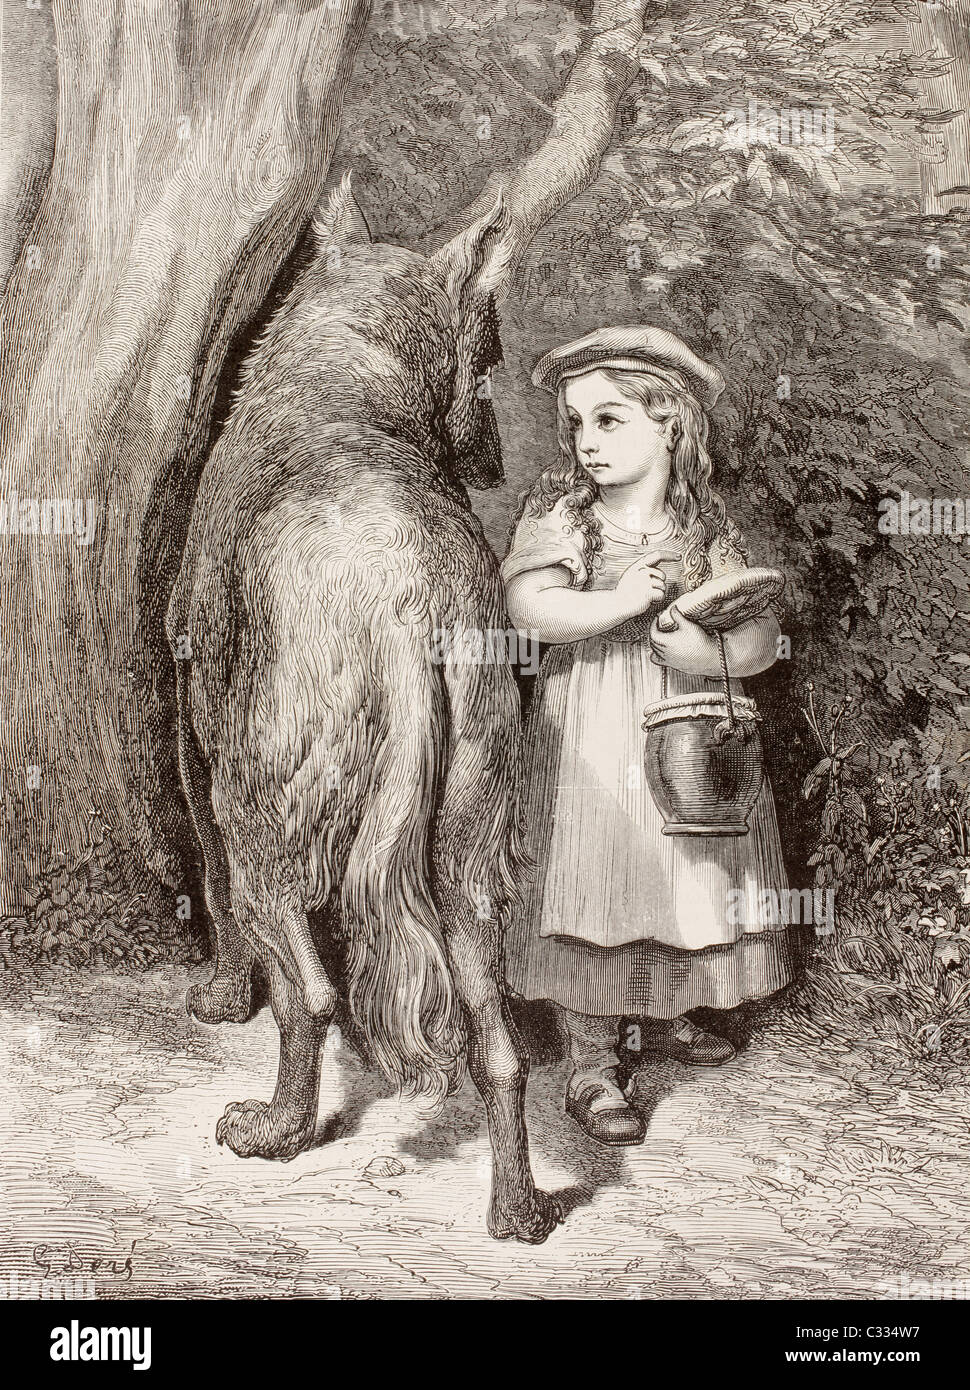 Szene aus Little Red Riding Hood von Charles Perrault. Little Red Riding Hood trifft den Wolf im Wald Stockfoto